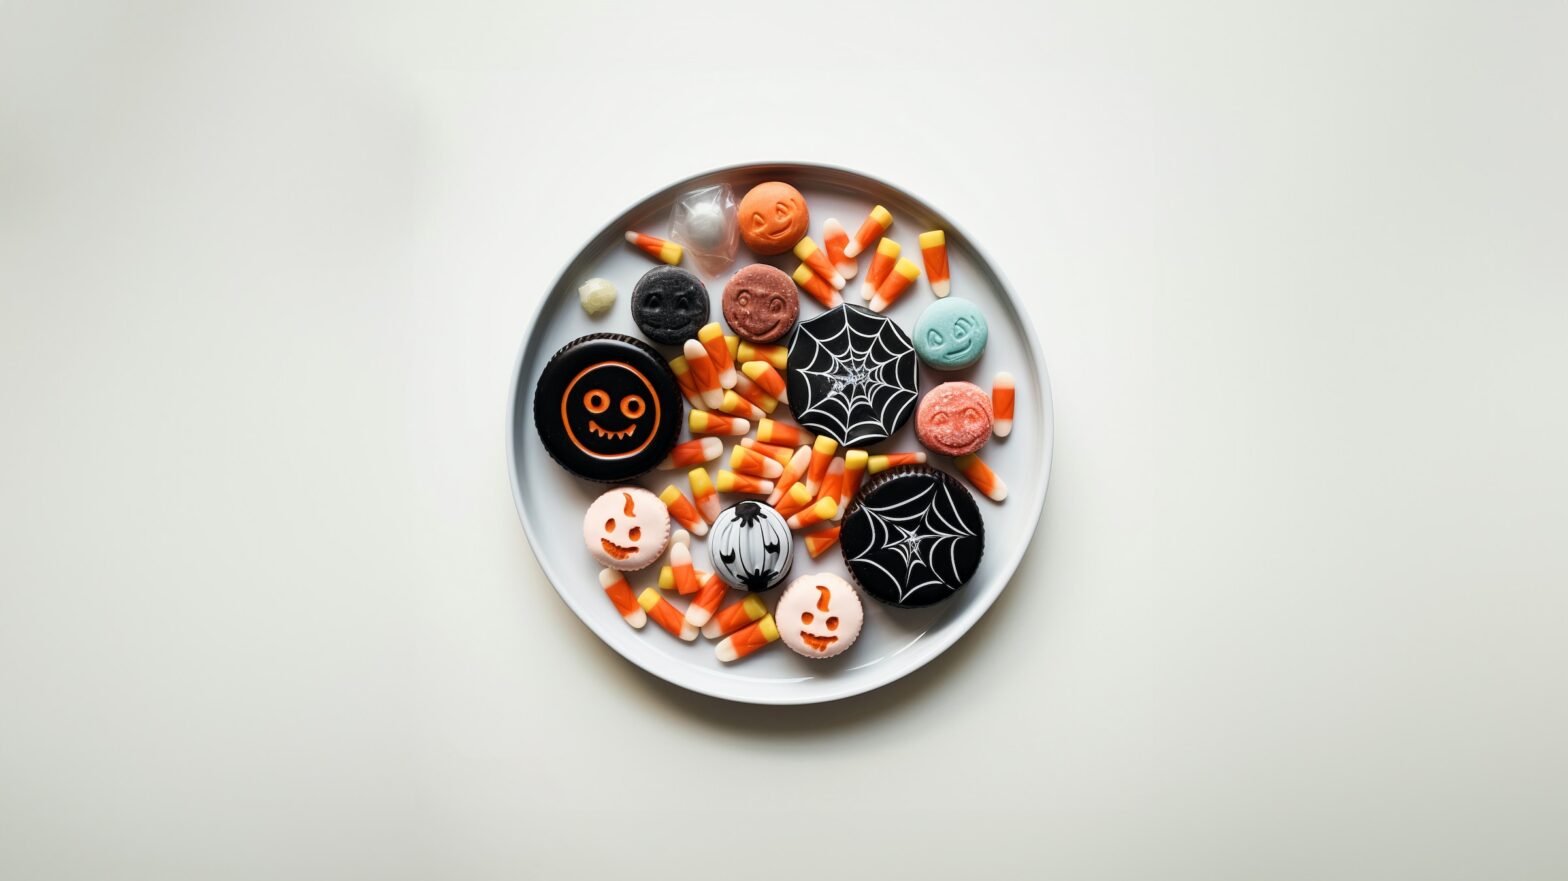 A plate of Halloween treats